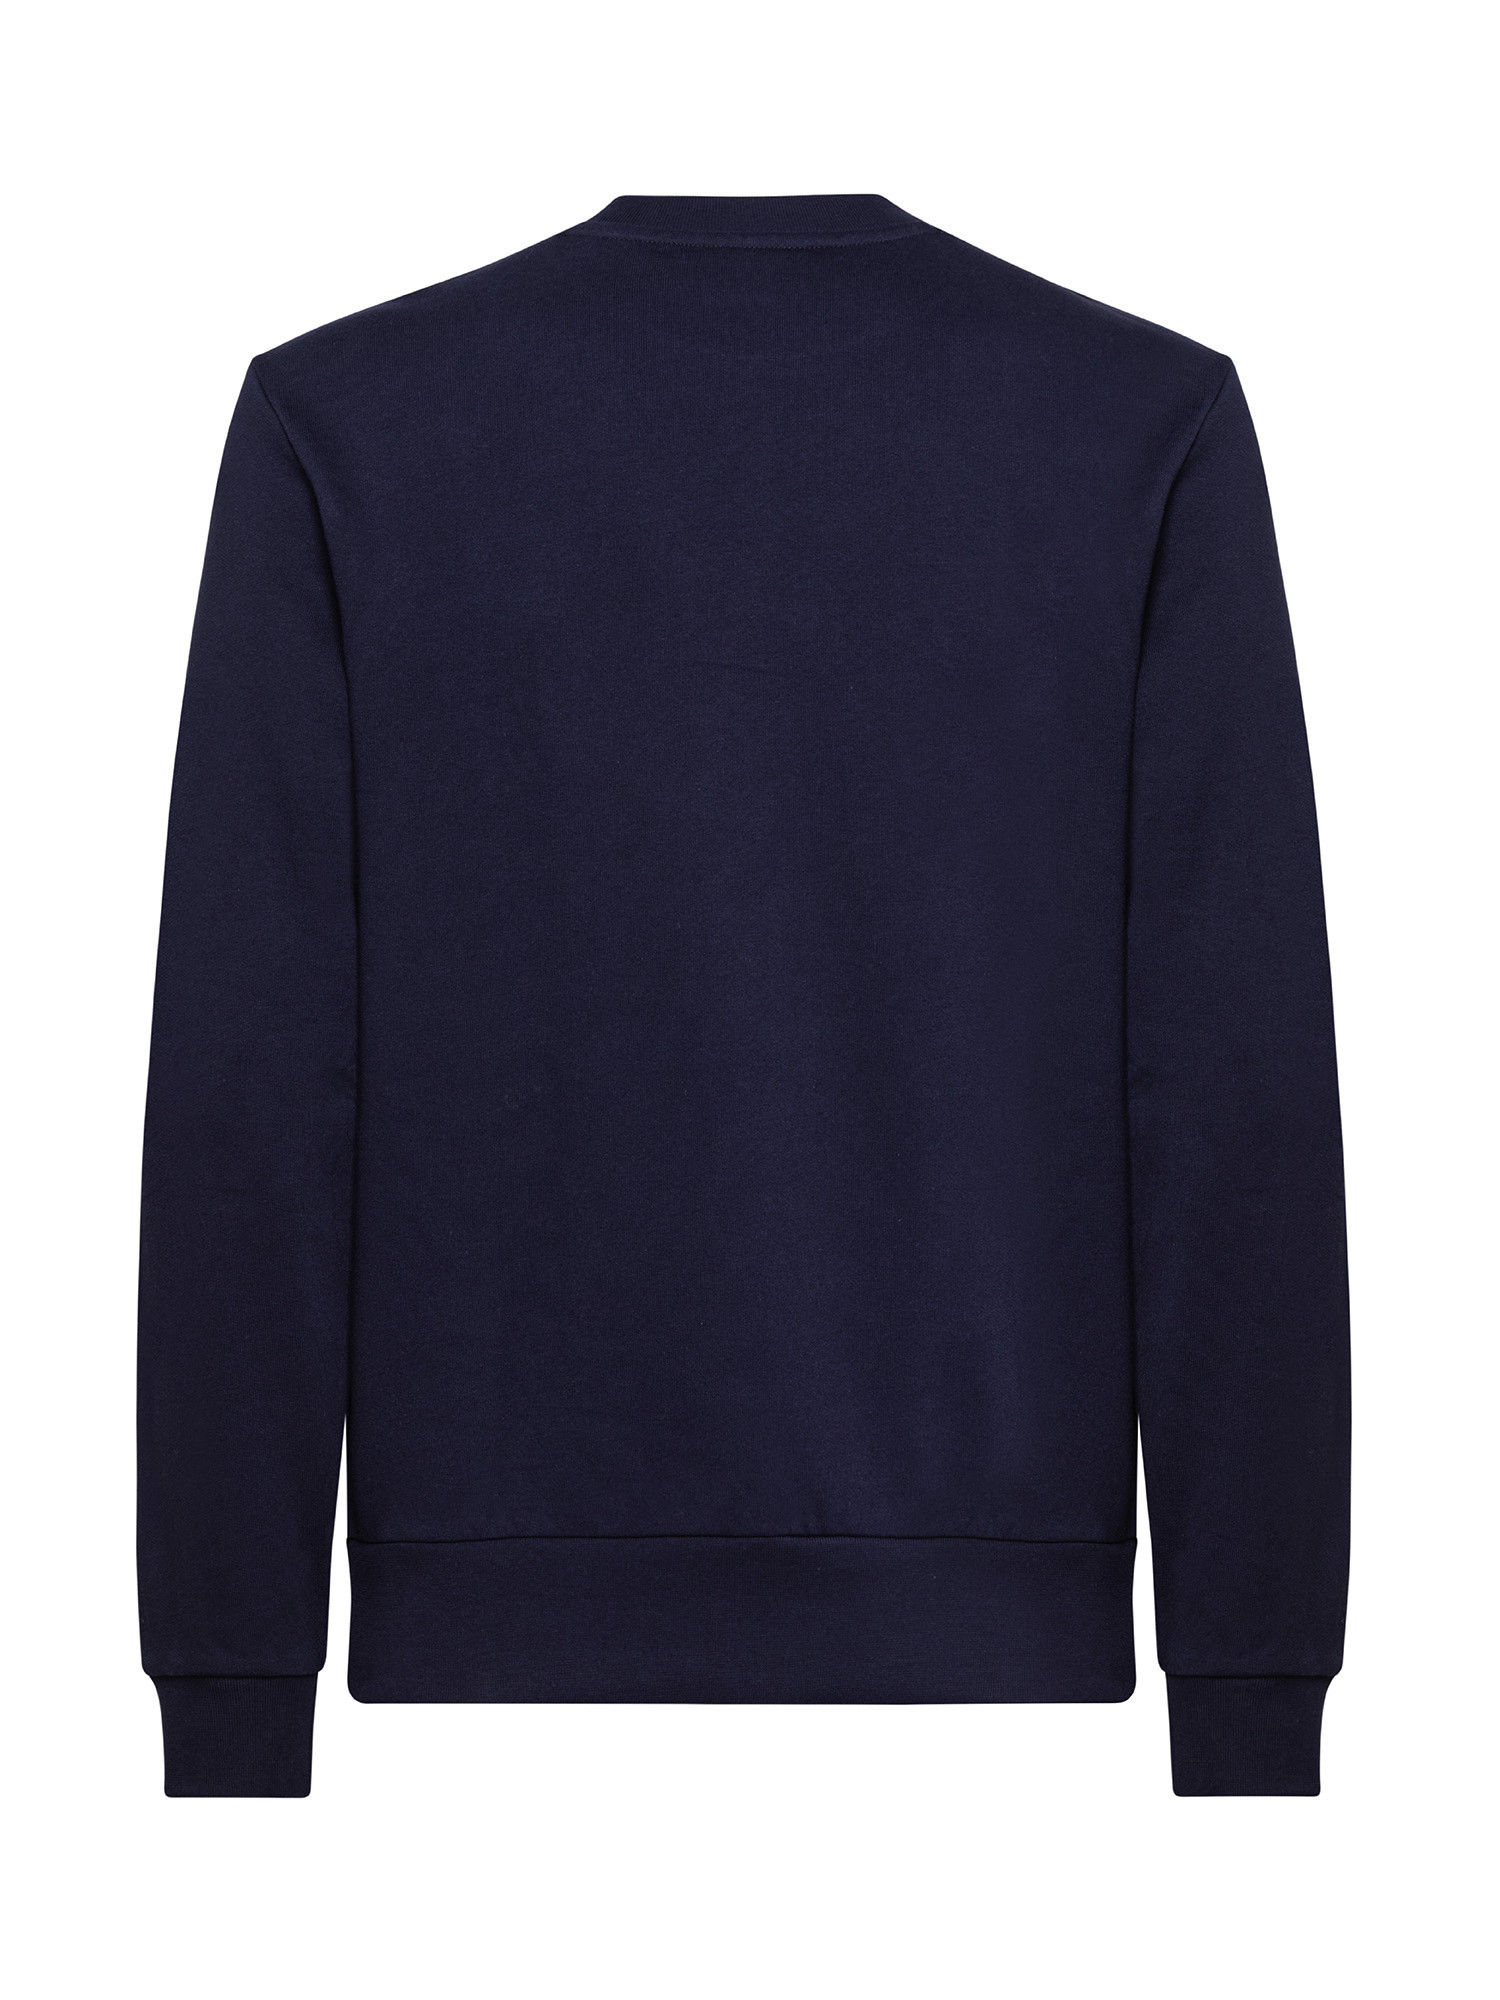 Lacoste - Sweatshirt in brushed organic cotton, Blue, large image number 1